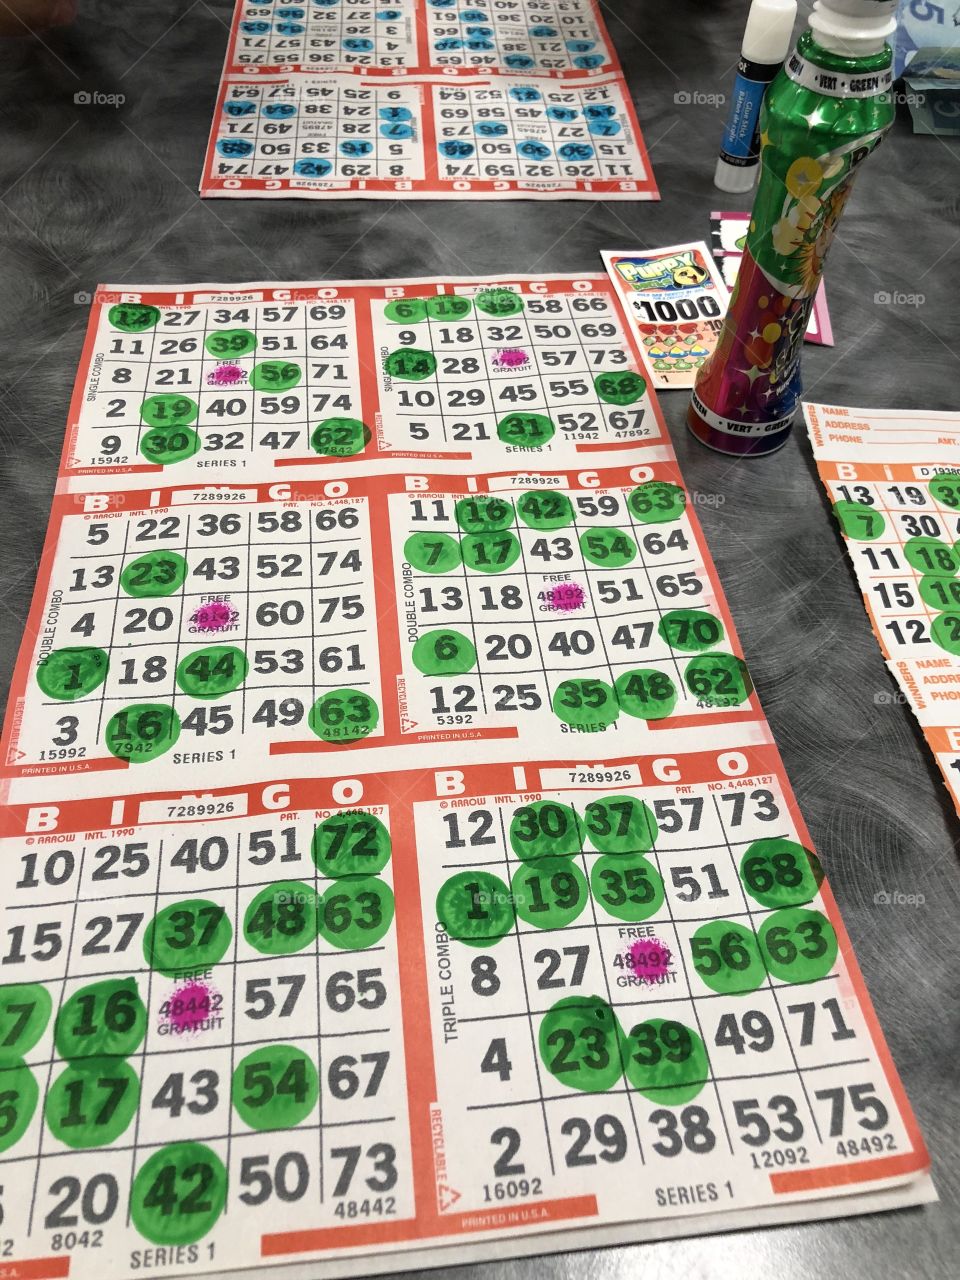 Having fun with a little Bingo. Dab away and hope to win! Playing the Nevada games as well. Bingo bingo bingo!